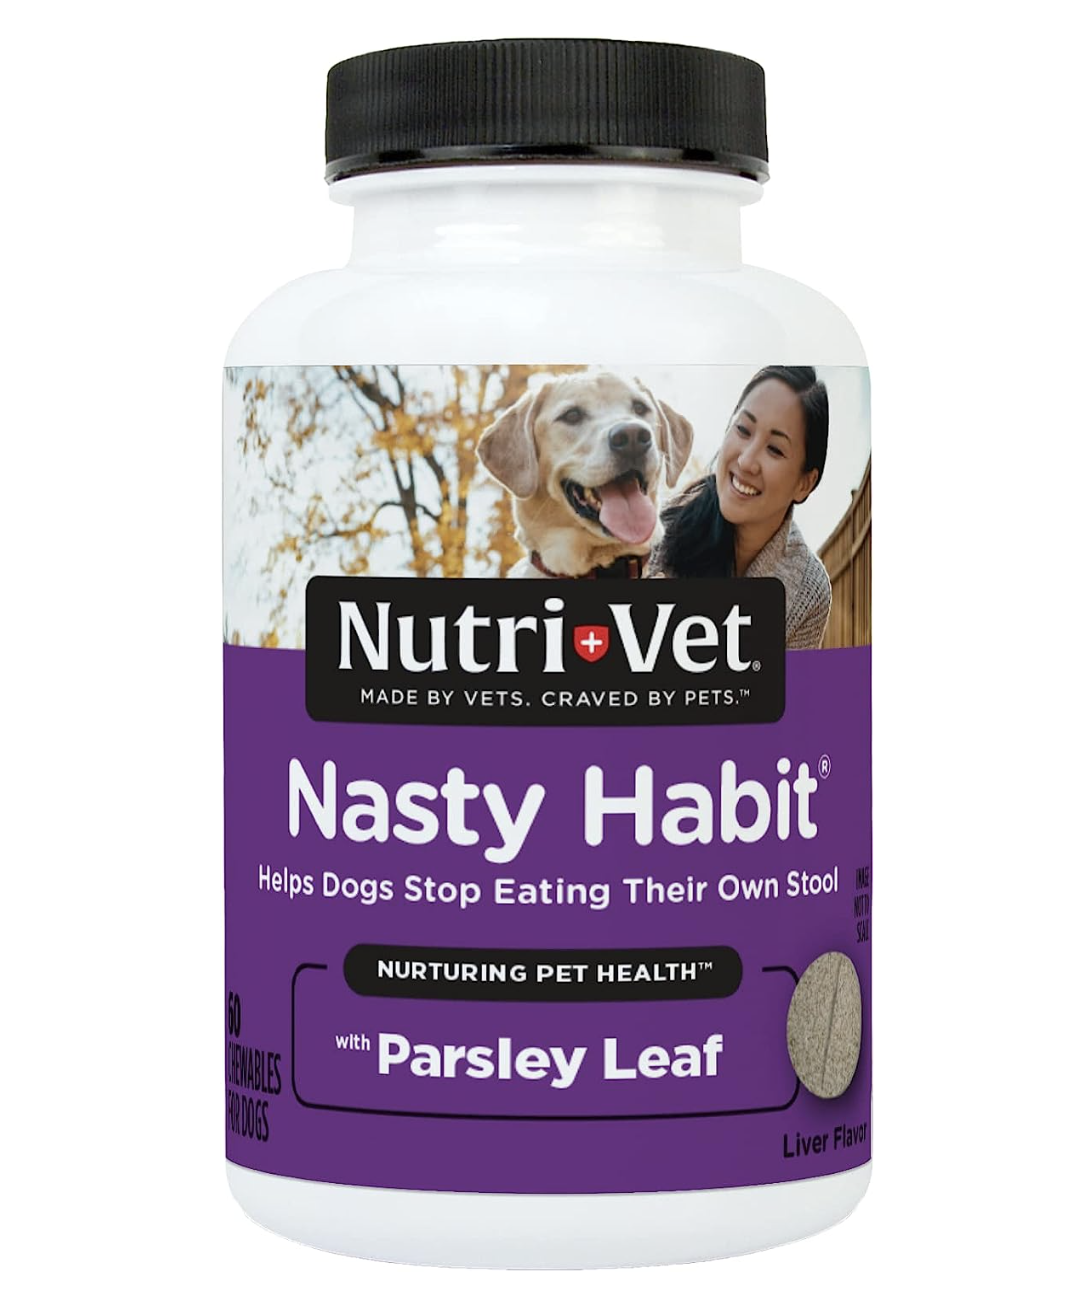 1. Nutri-Vet Nasty Habit Chewable Tablets for Dogs